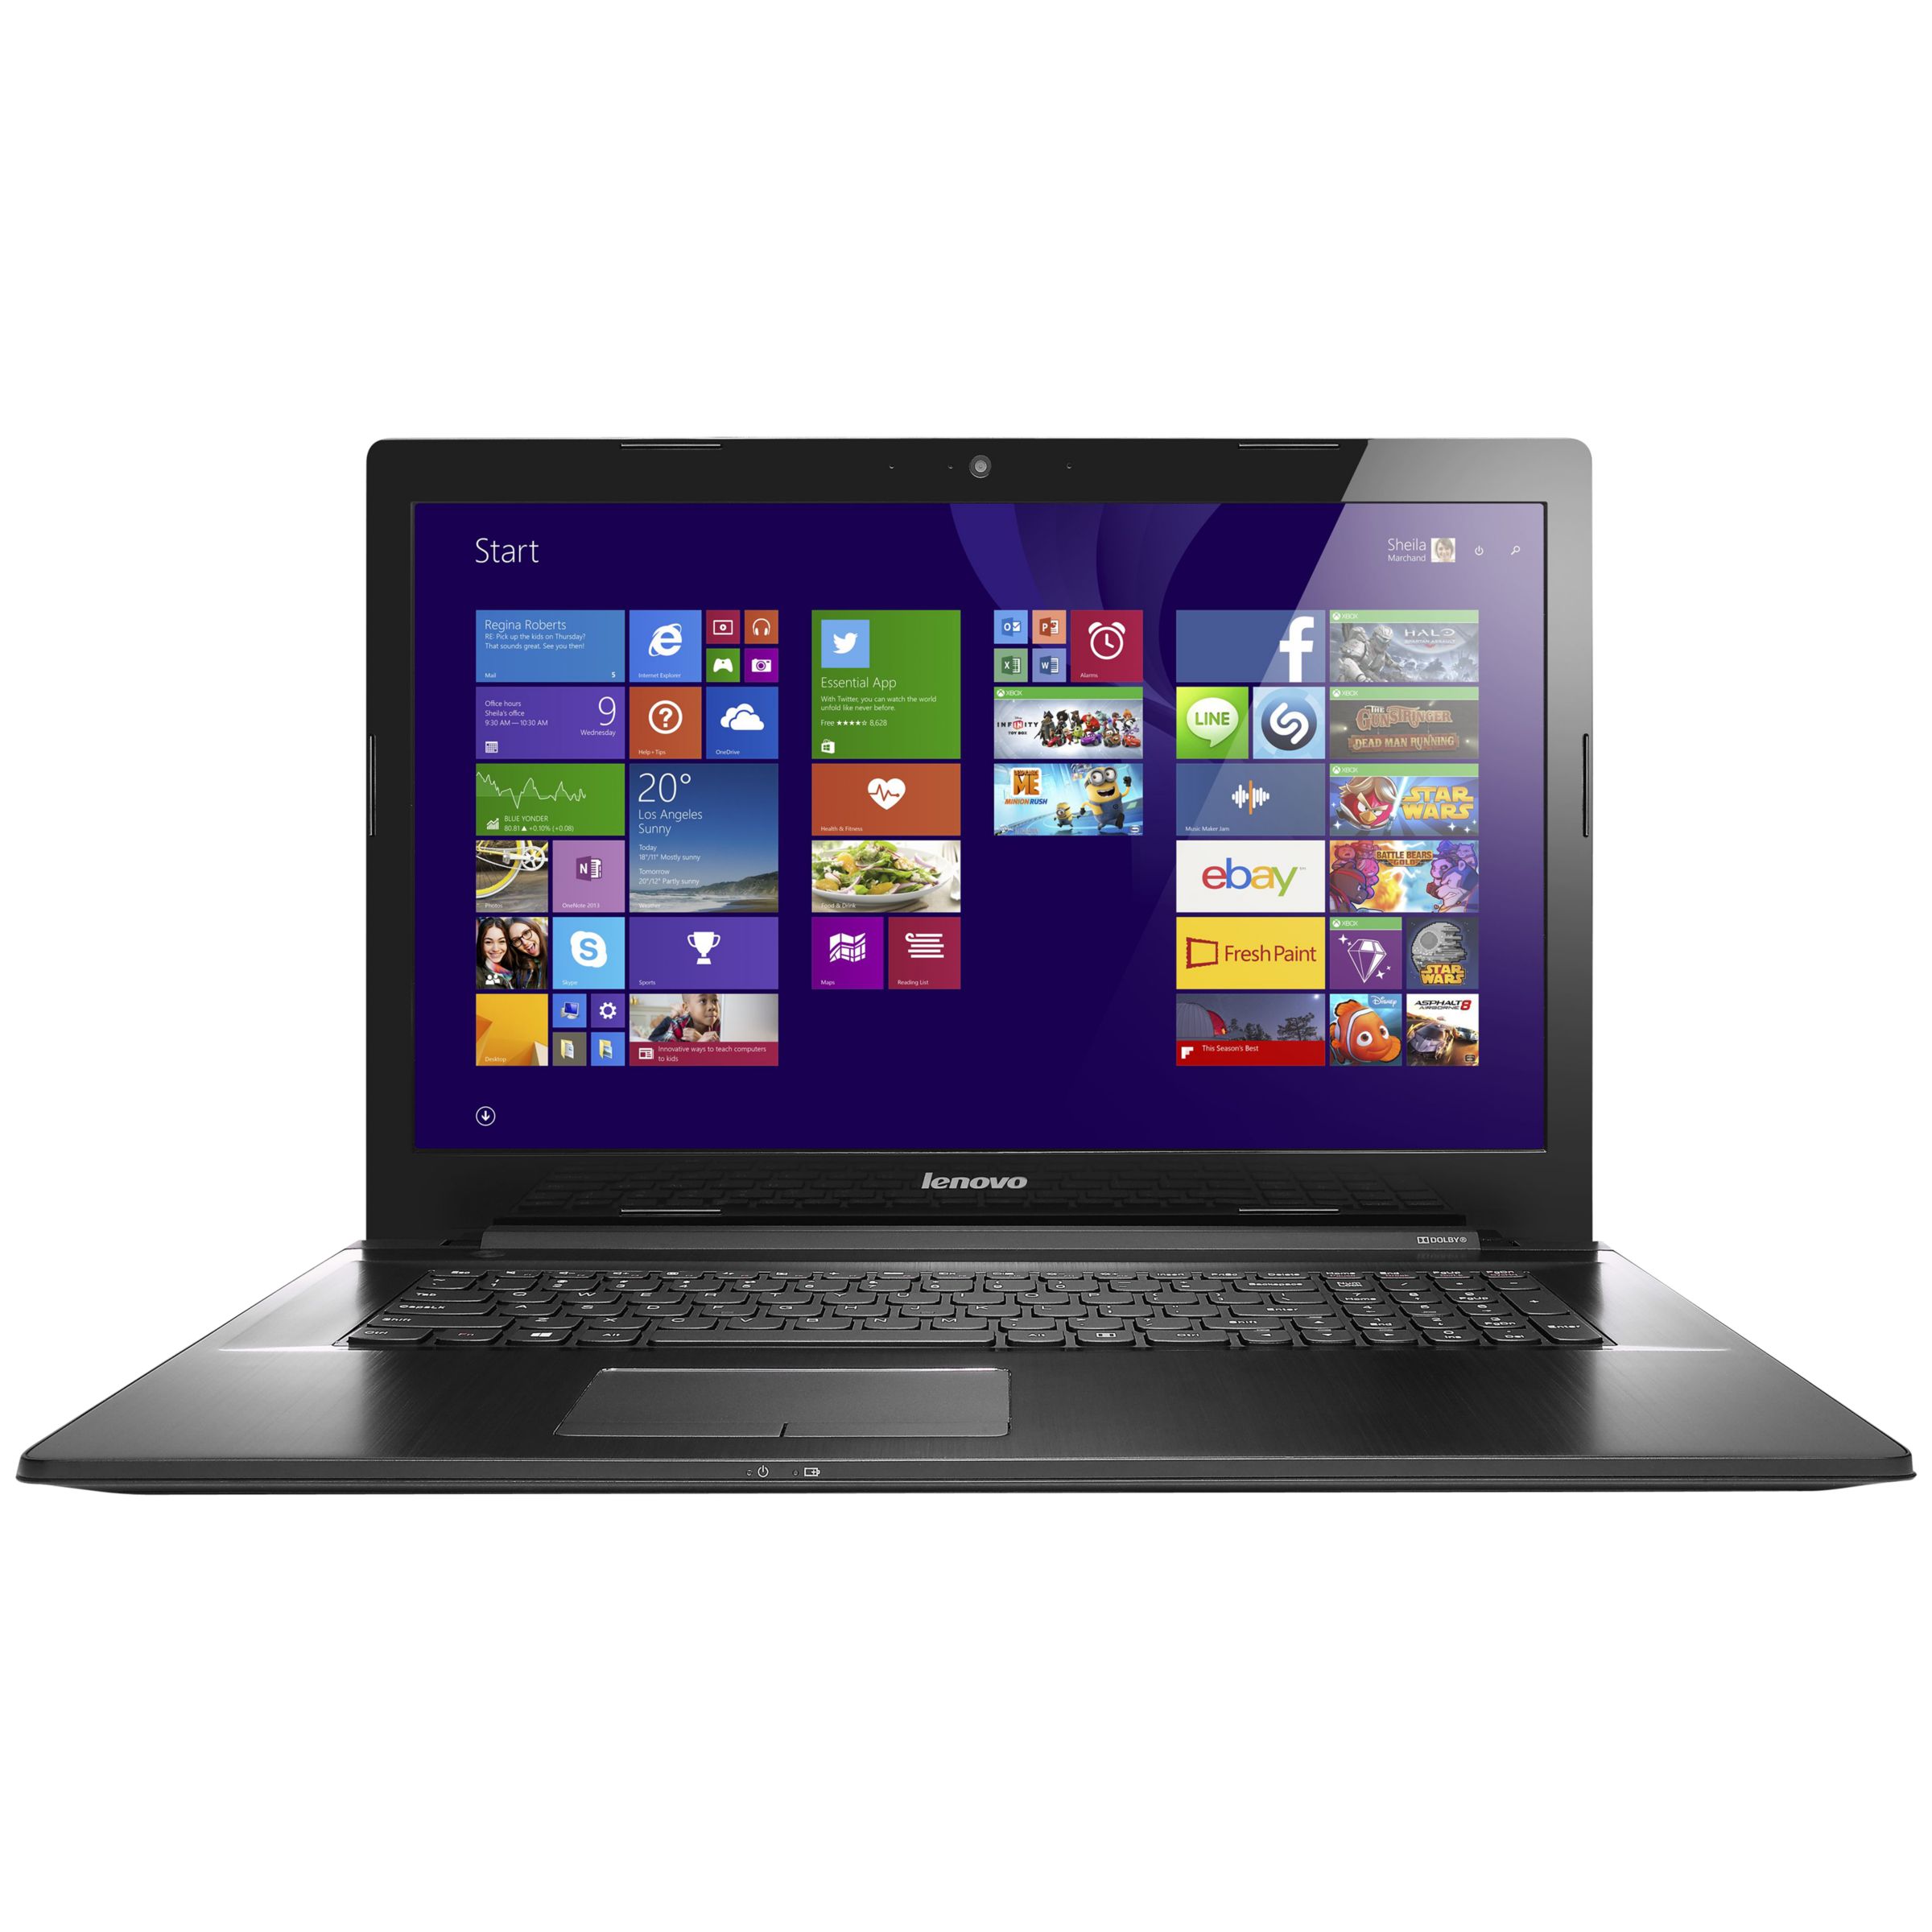 Lenovo Z70 Laptop, Intel Core i7, 16GB RAM, 1TB, 17.3", Black